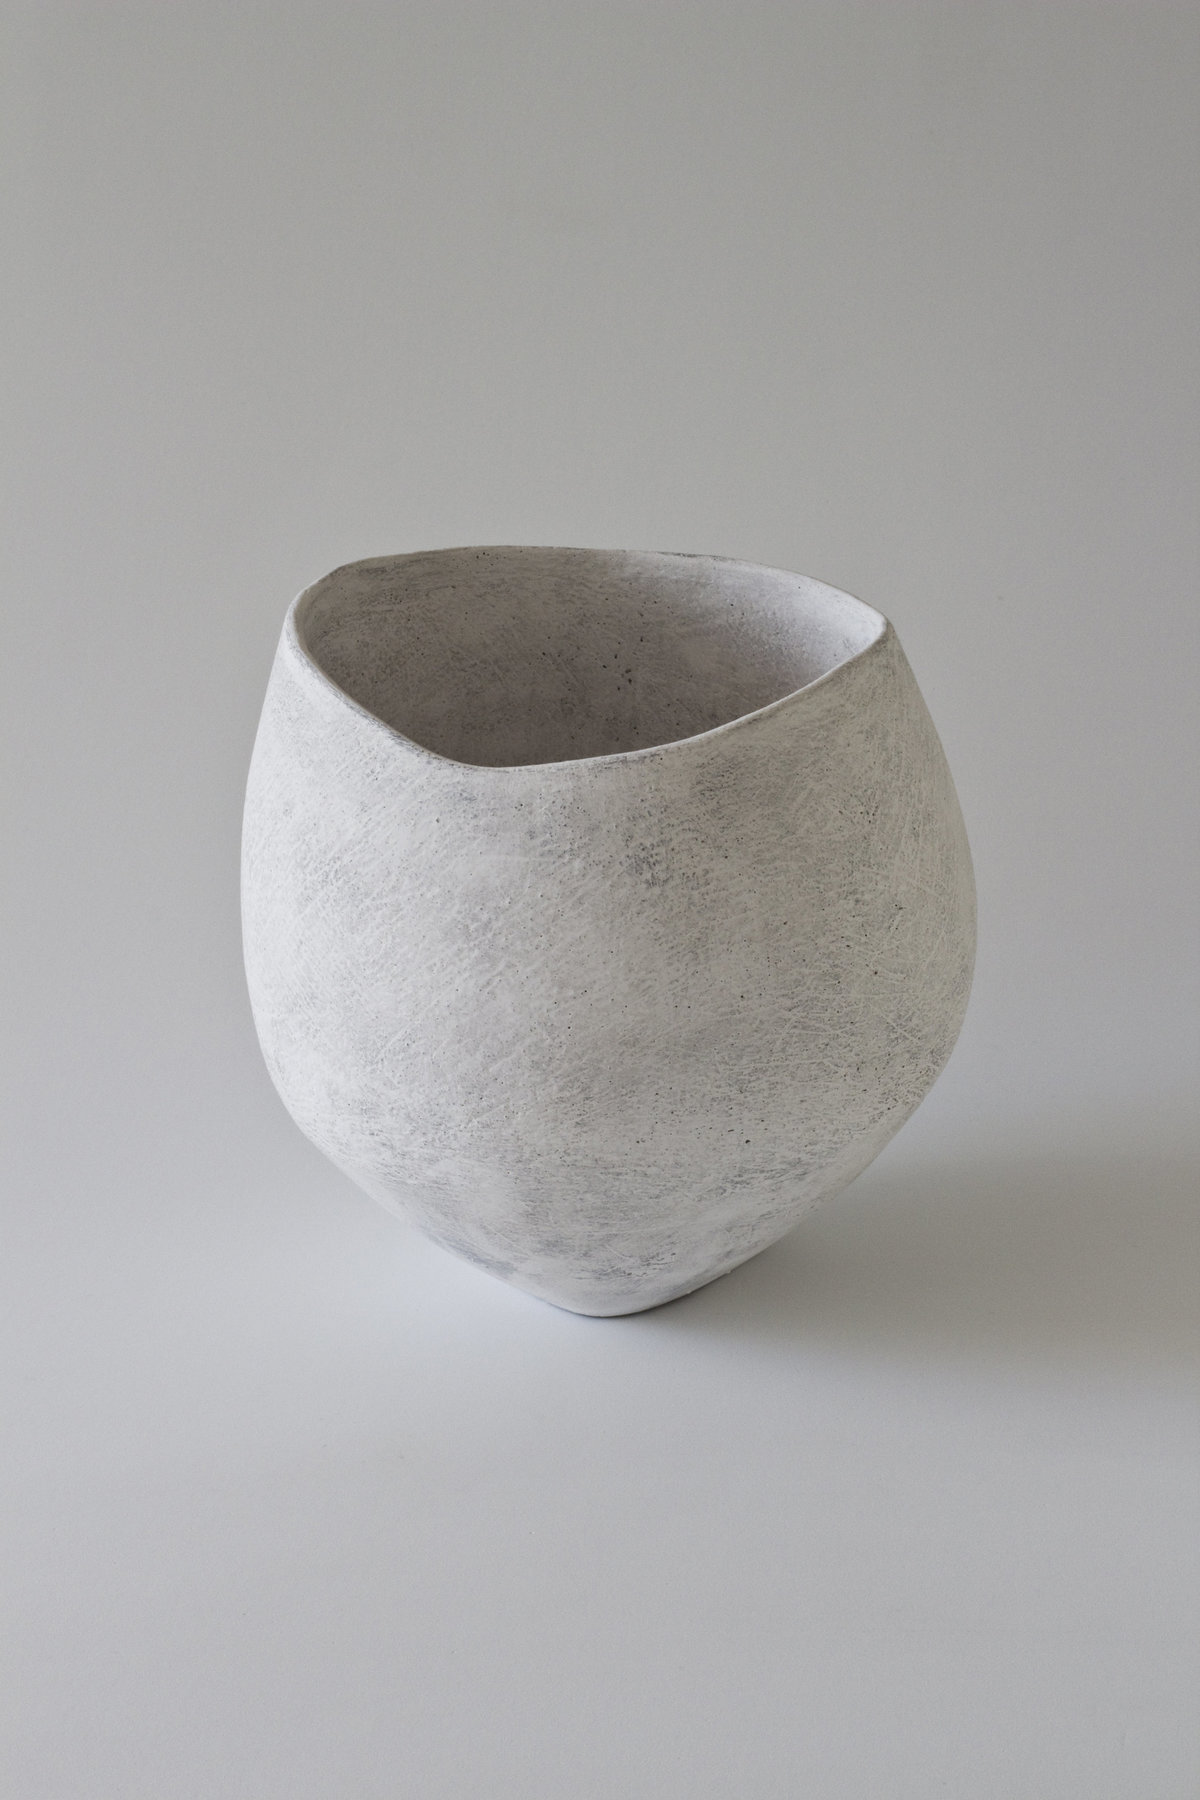 Yasha-Butler-Ceramic-Sculpture-Bowl-White-Lithic_2-3500px